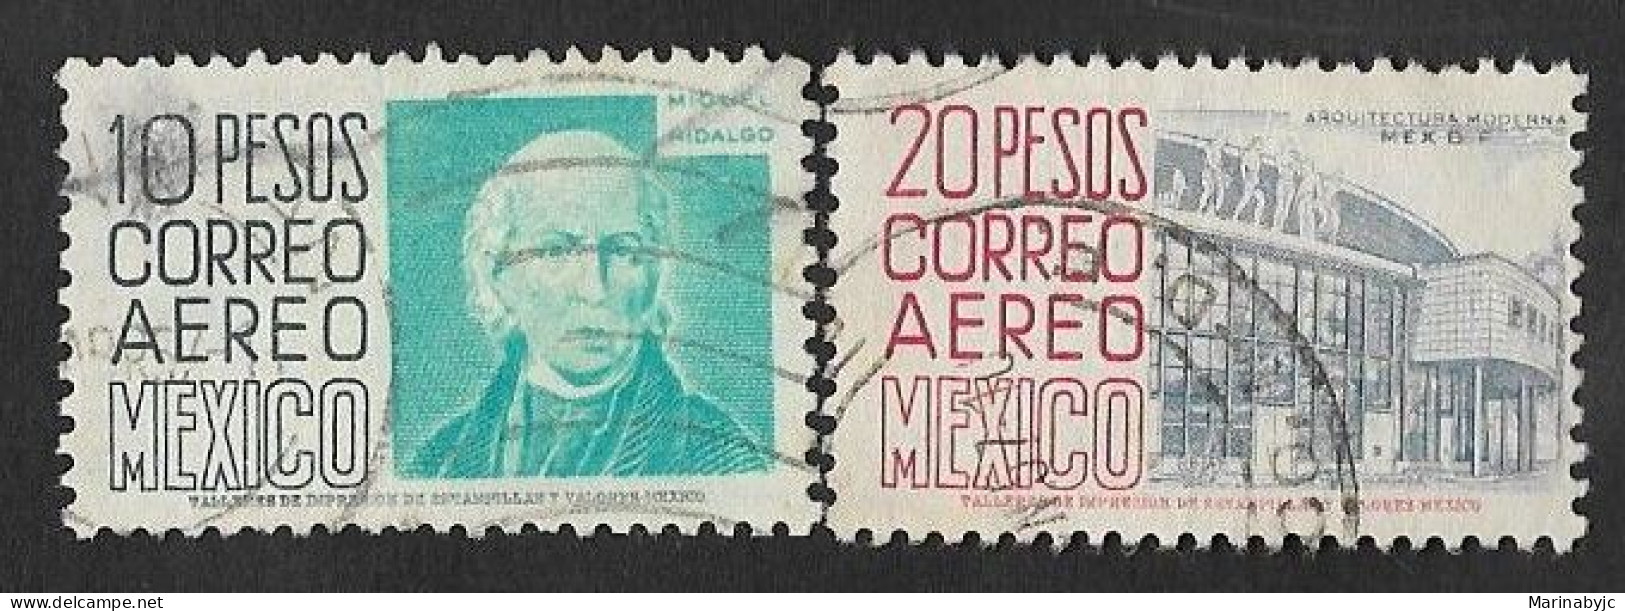 SD)1953-56 MEXICO  MIGUEL HIDALGO 10P SCT C216, MODERN BUILDING 20P SCT C217 LQ. WMK. 300 HORIZONTAL, USED - Mexico